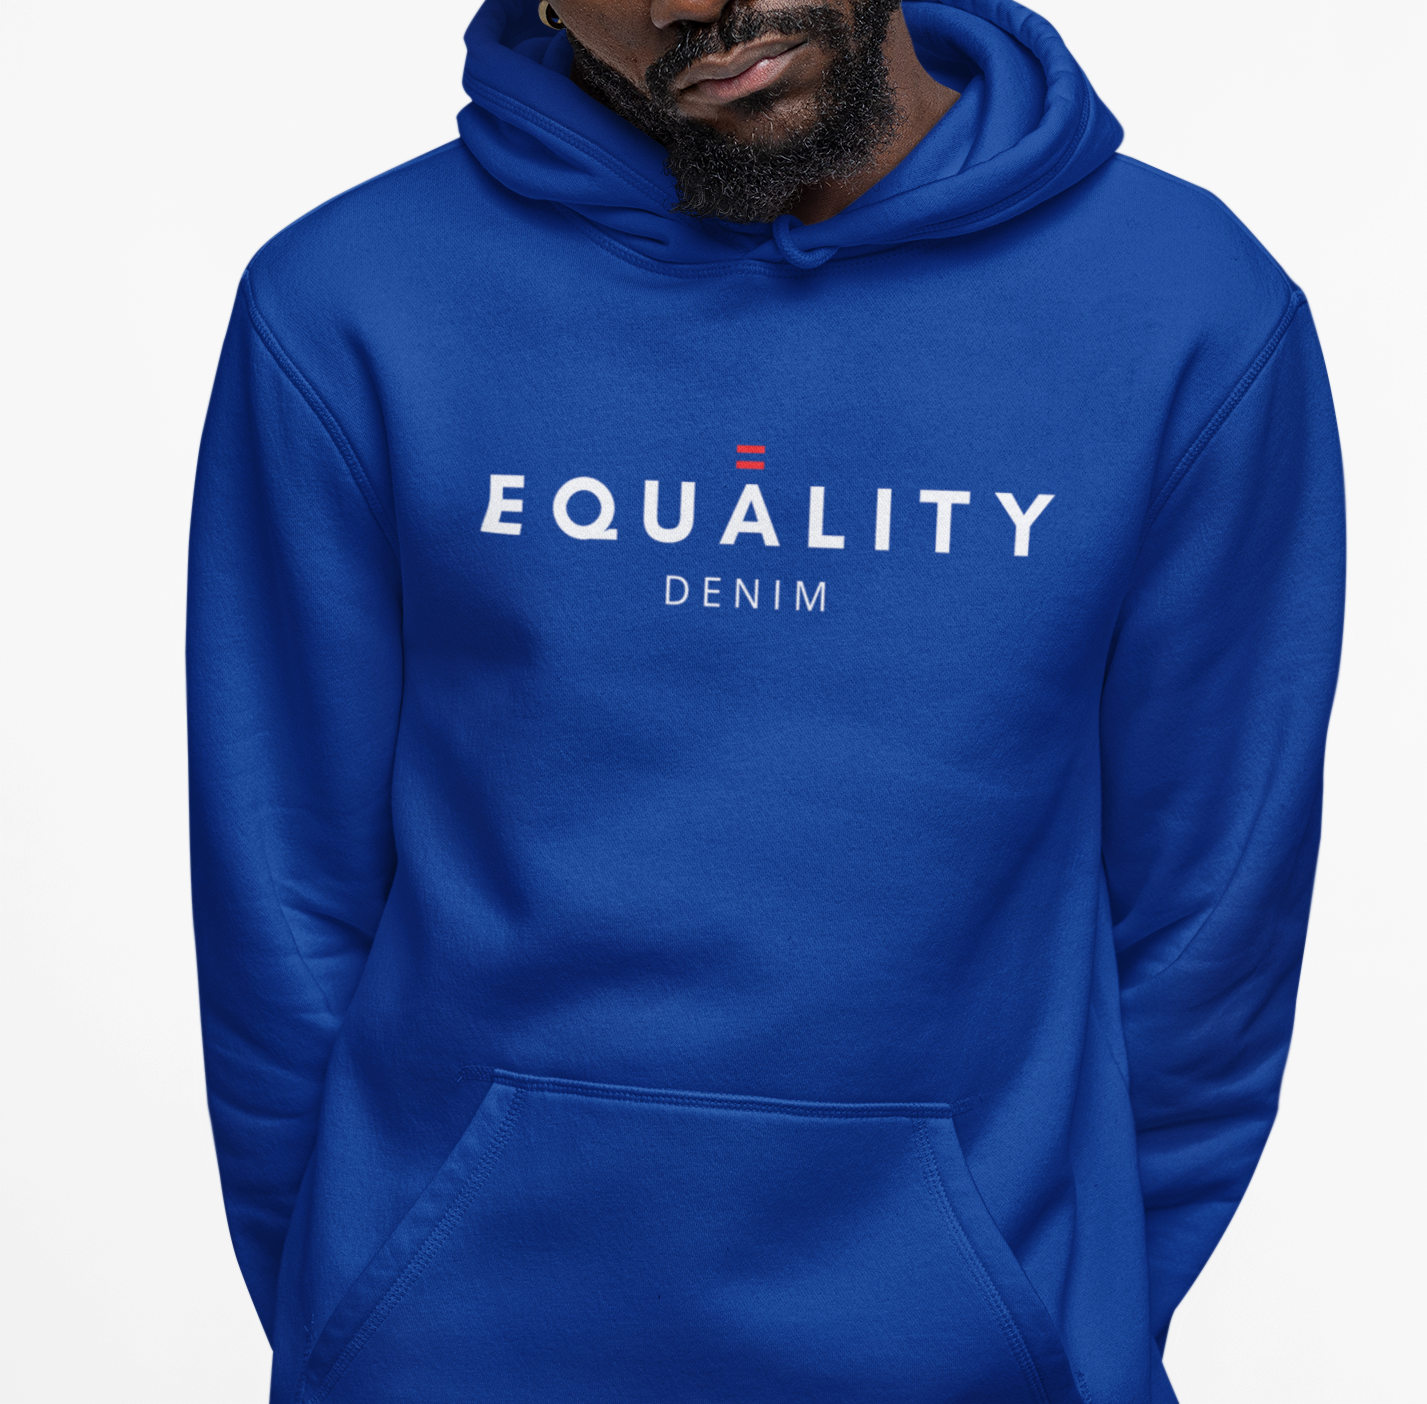 A man wearing a blue custom hoodie